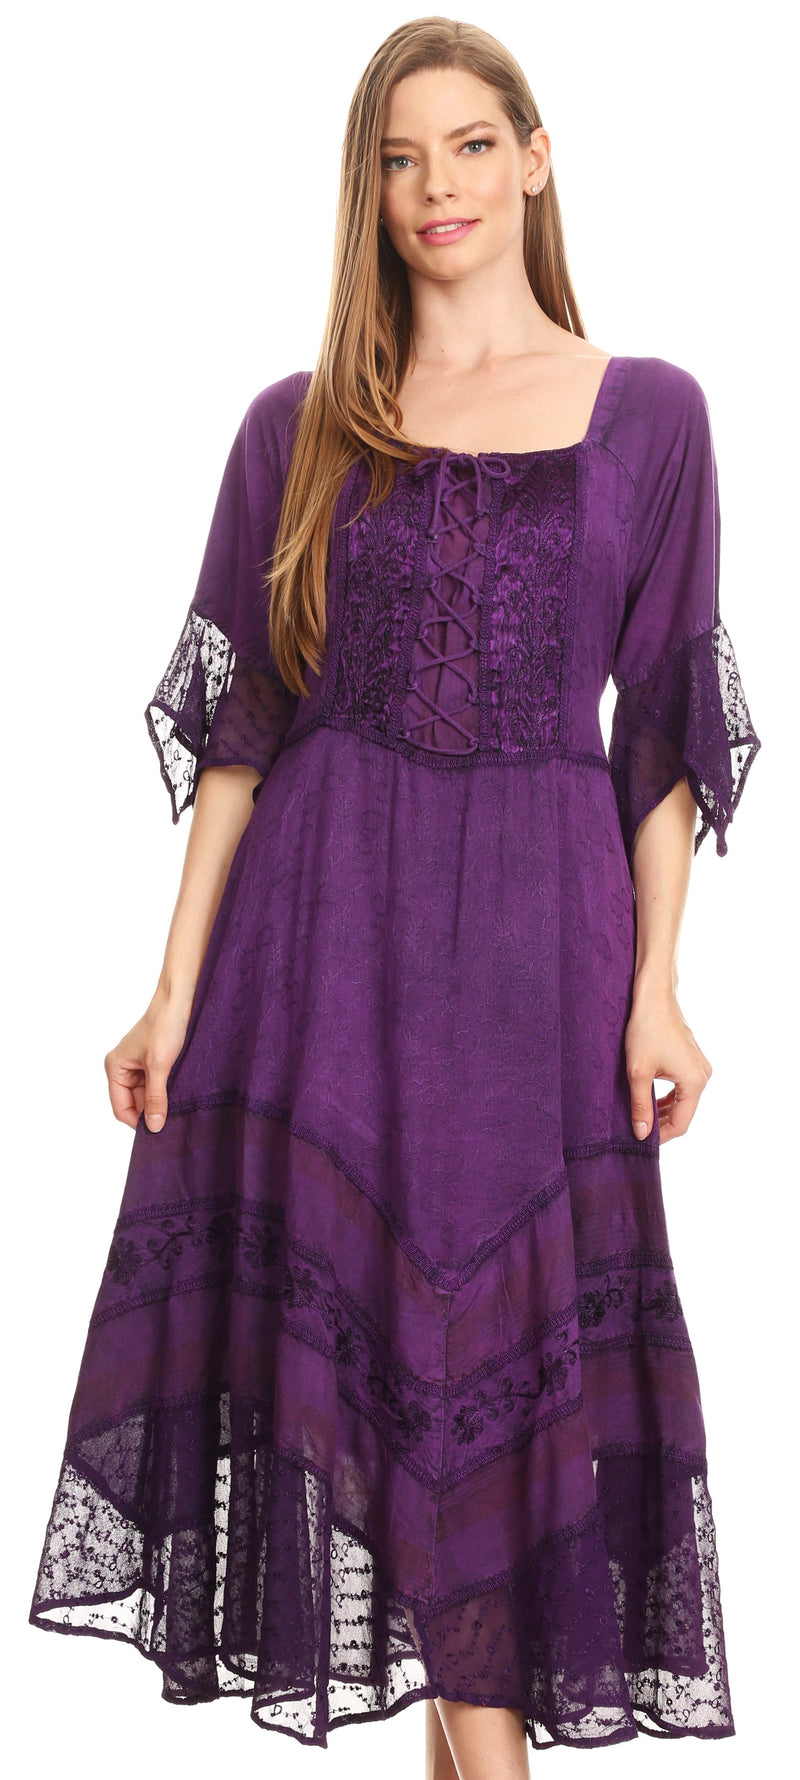 Sakkas Bexley Scoop Neck Bell Sleeve Bohemian Gypsy Embroidered Corset Dress